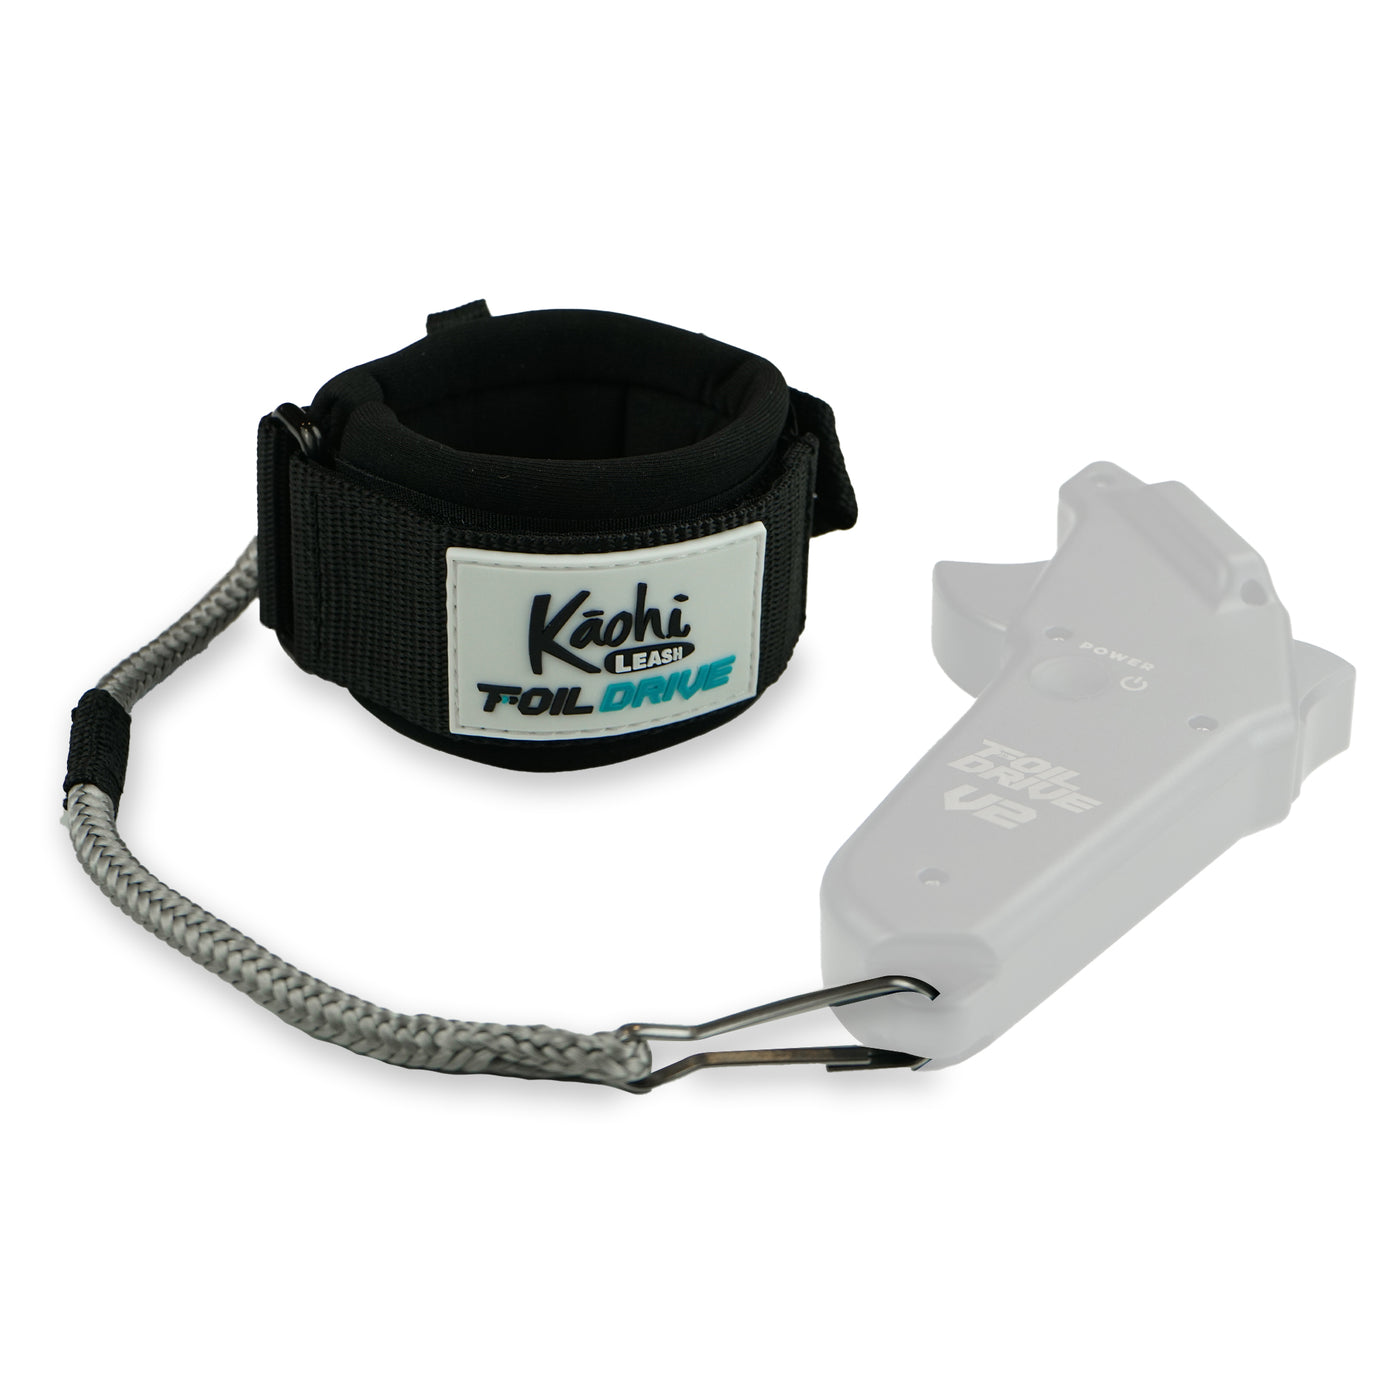 Kāohi Leash x Foil Drive Wrist Leash for Throttle Controller